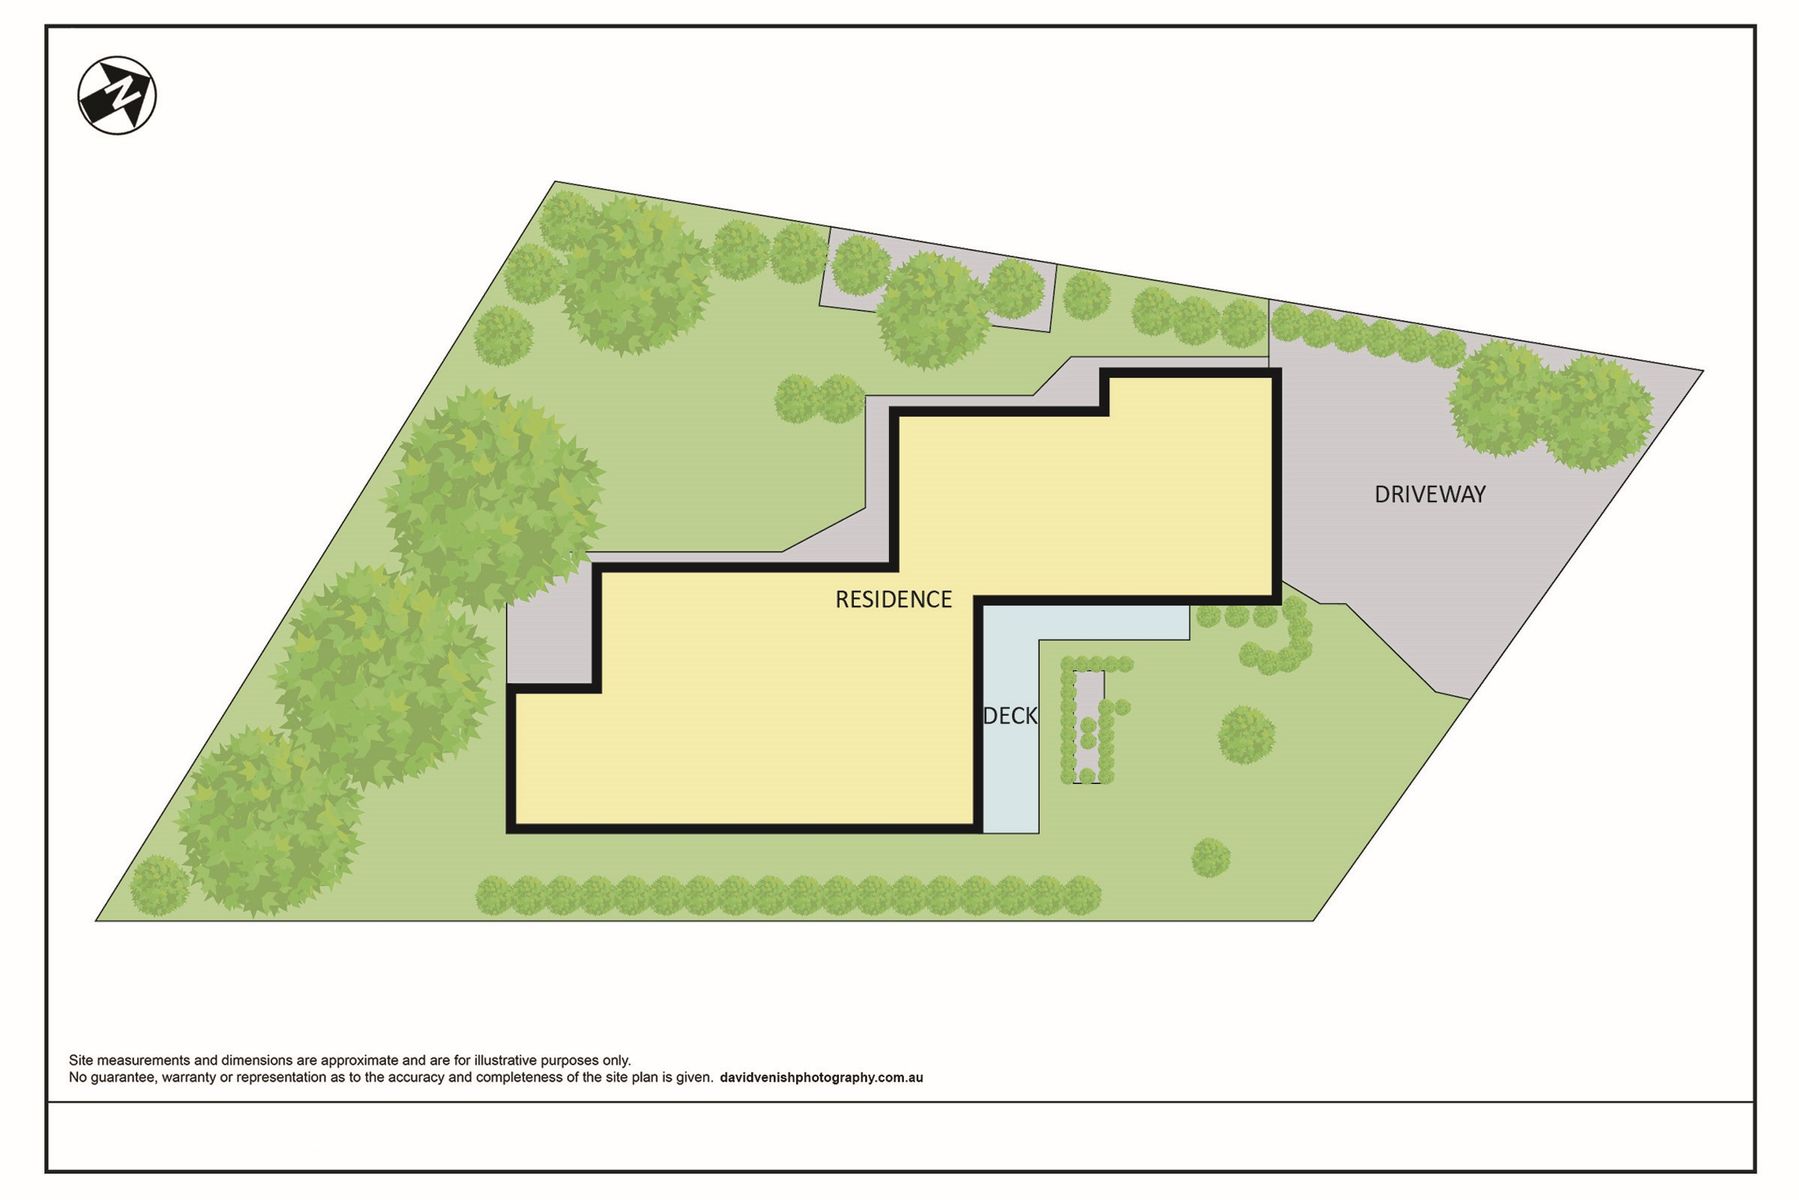 28 Berrima Road Moss Vale   Site Plan no address